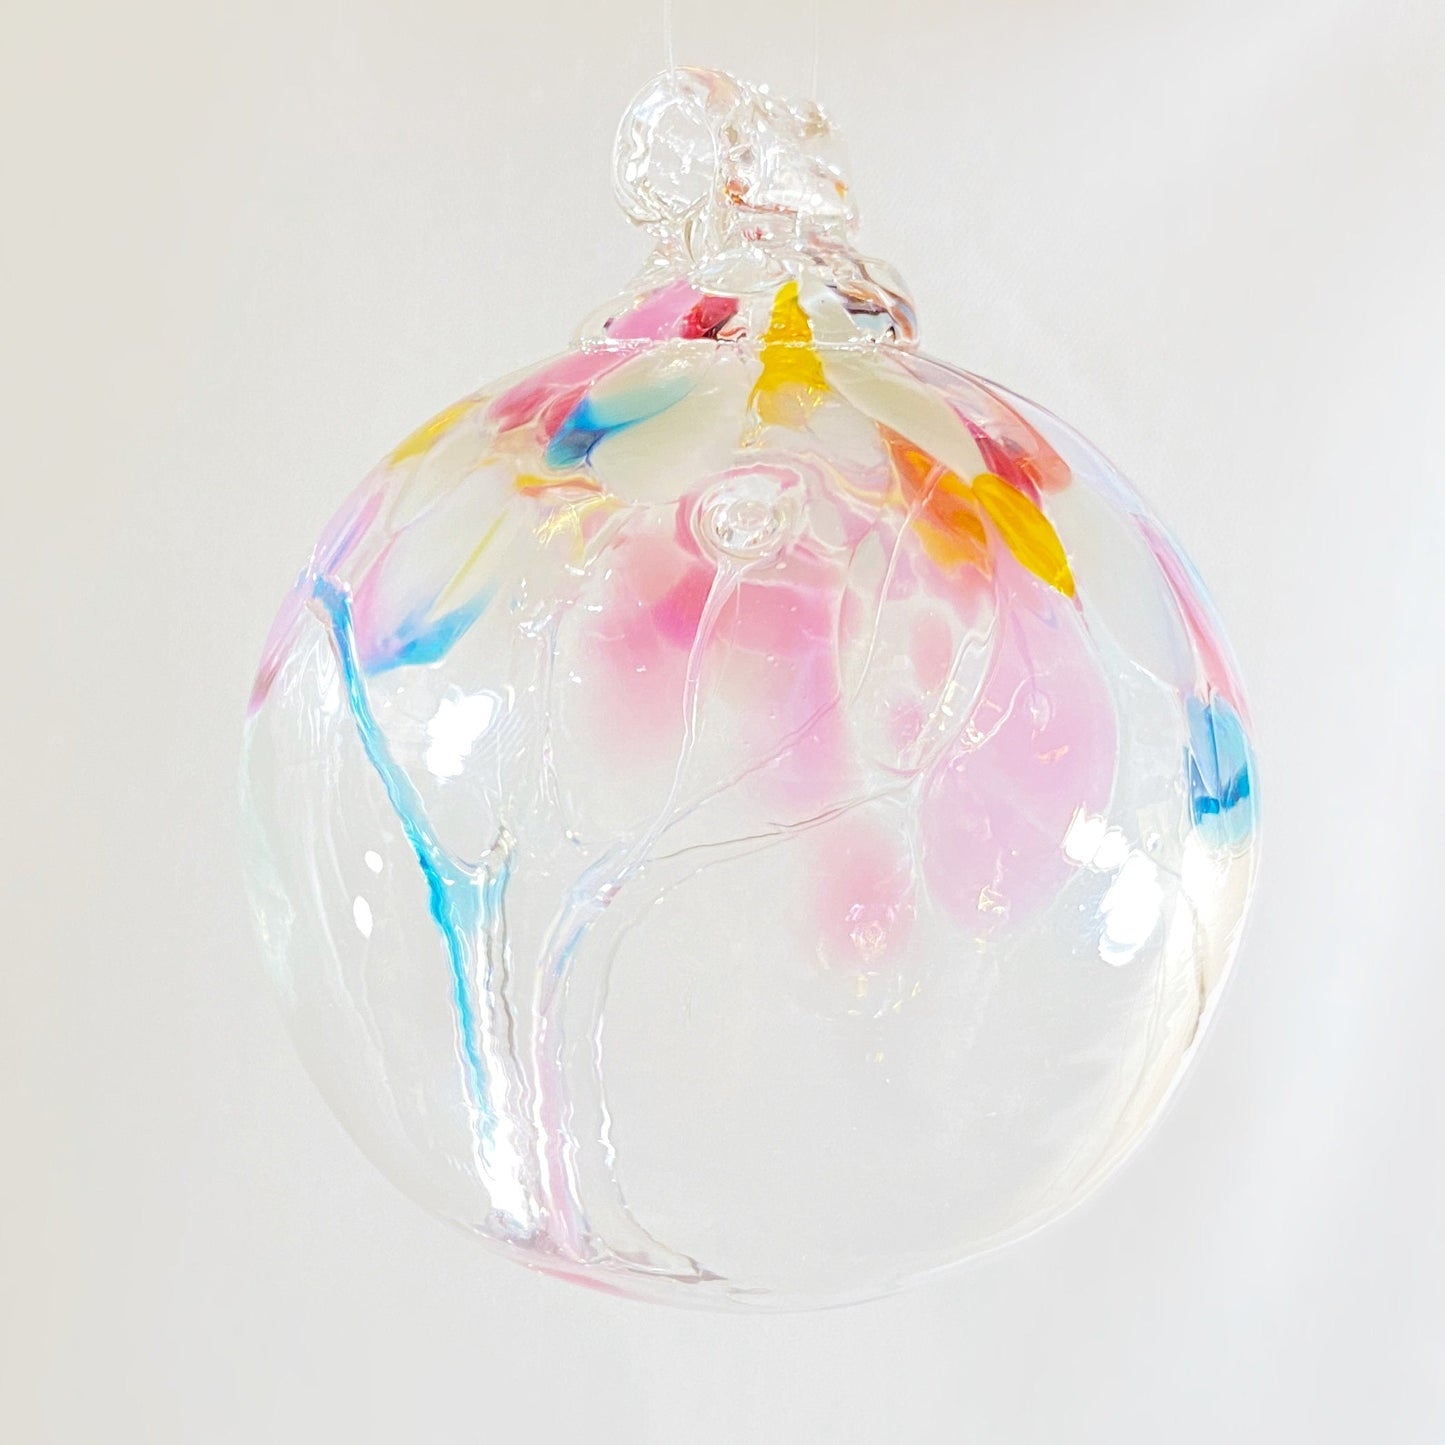 Handmade Glass Art 2” Globe Ornament - Tree of Memories